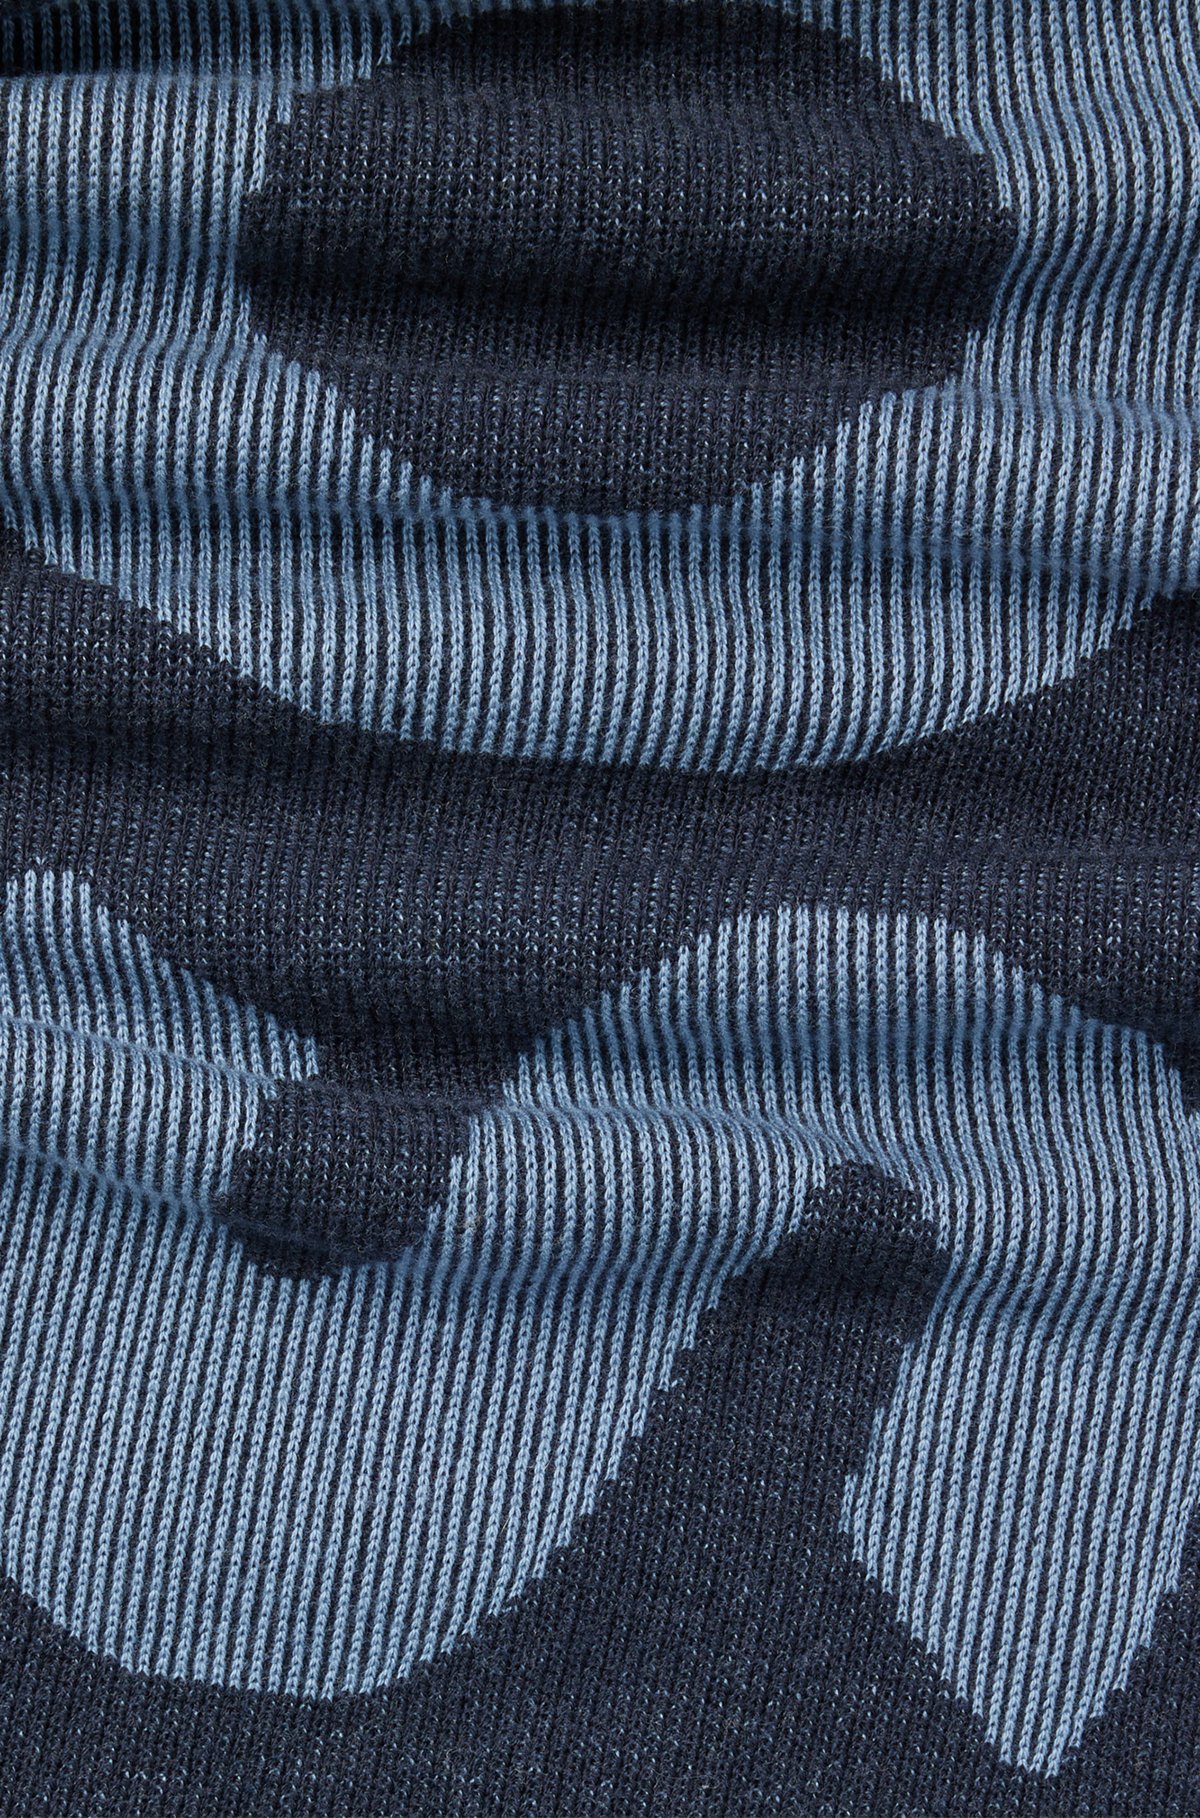 Logo-knit - blend BOSS a cotton-wool scarf in